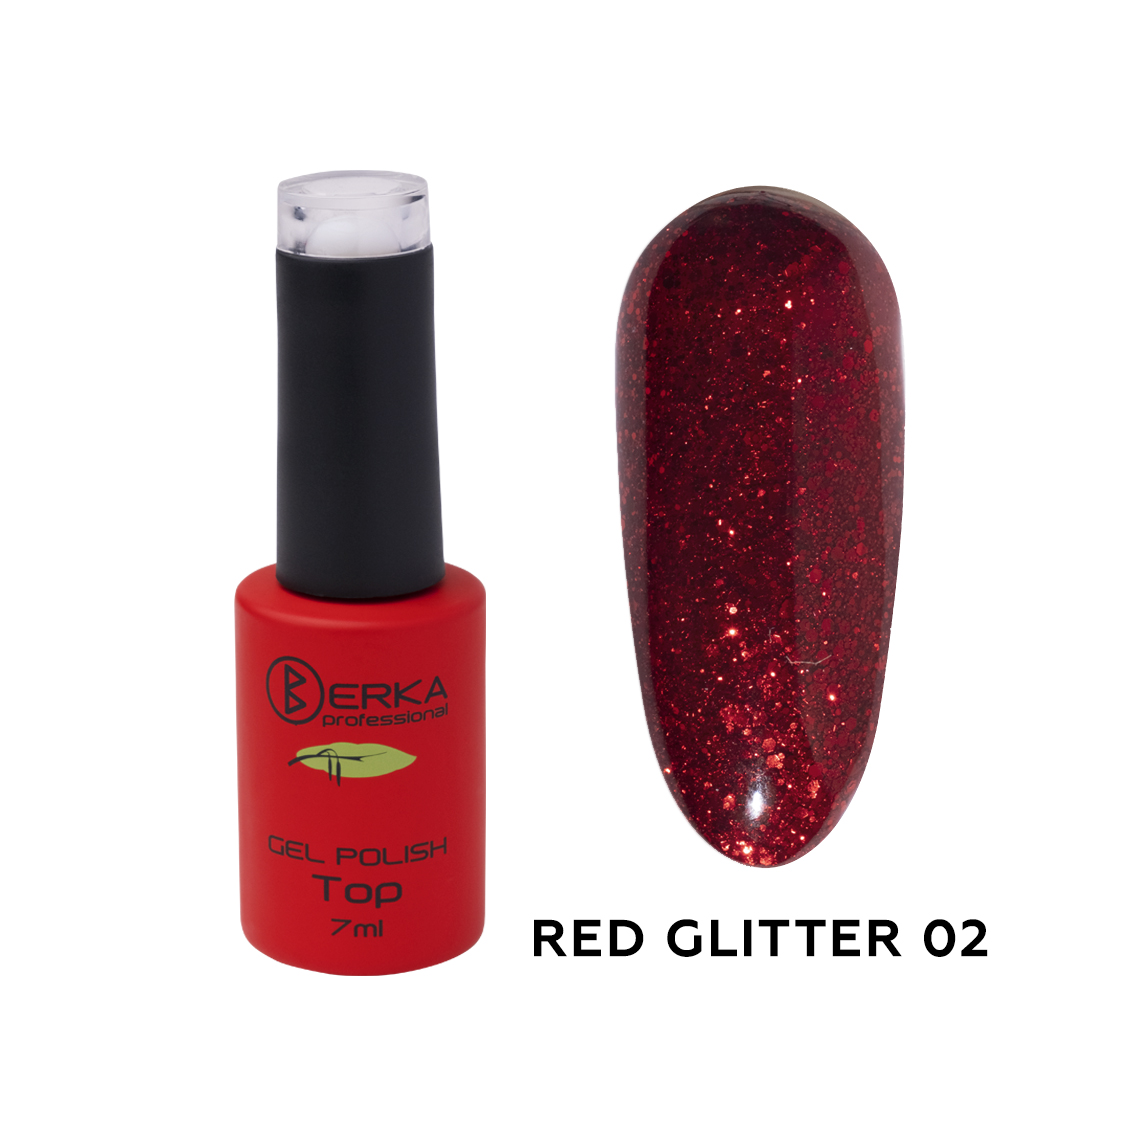 Гель-лак Red glitter №02 7мл Berka